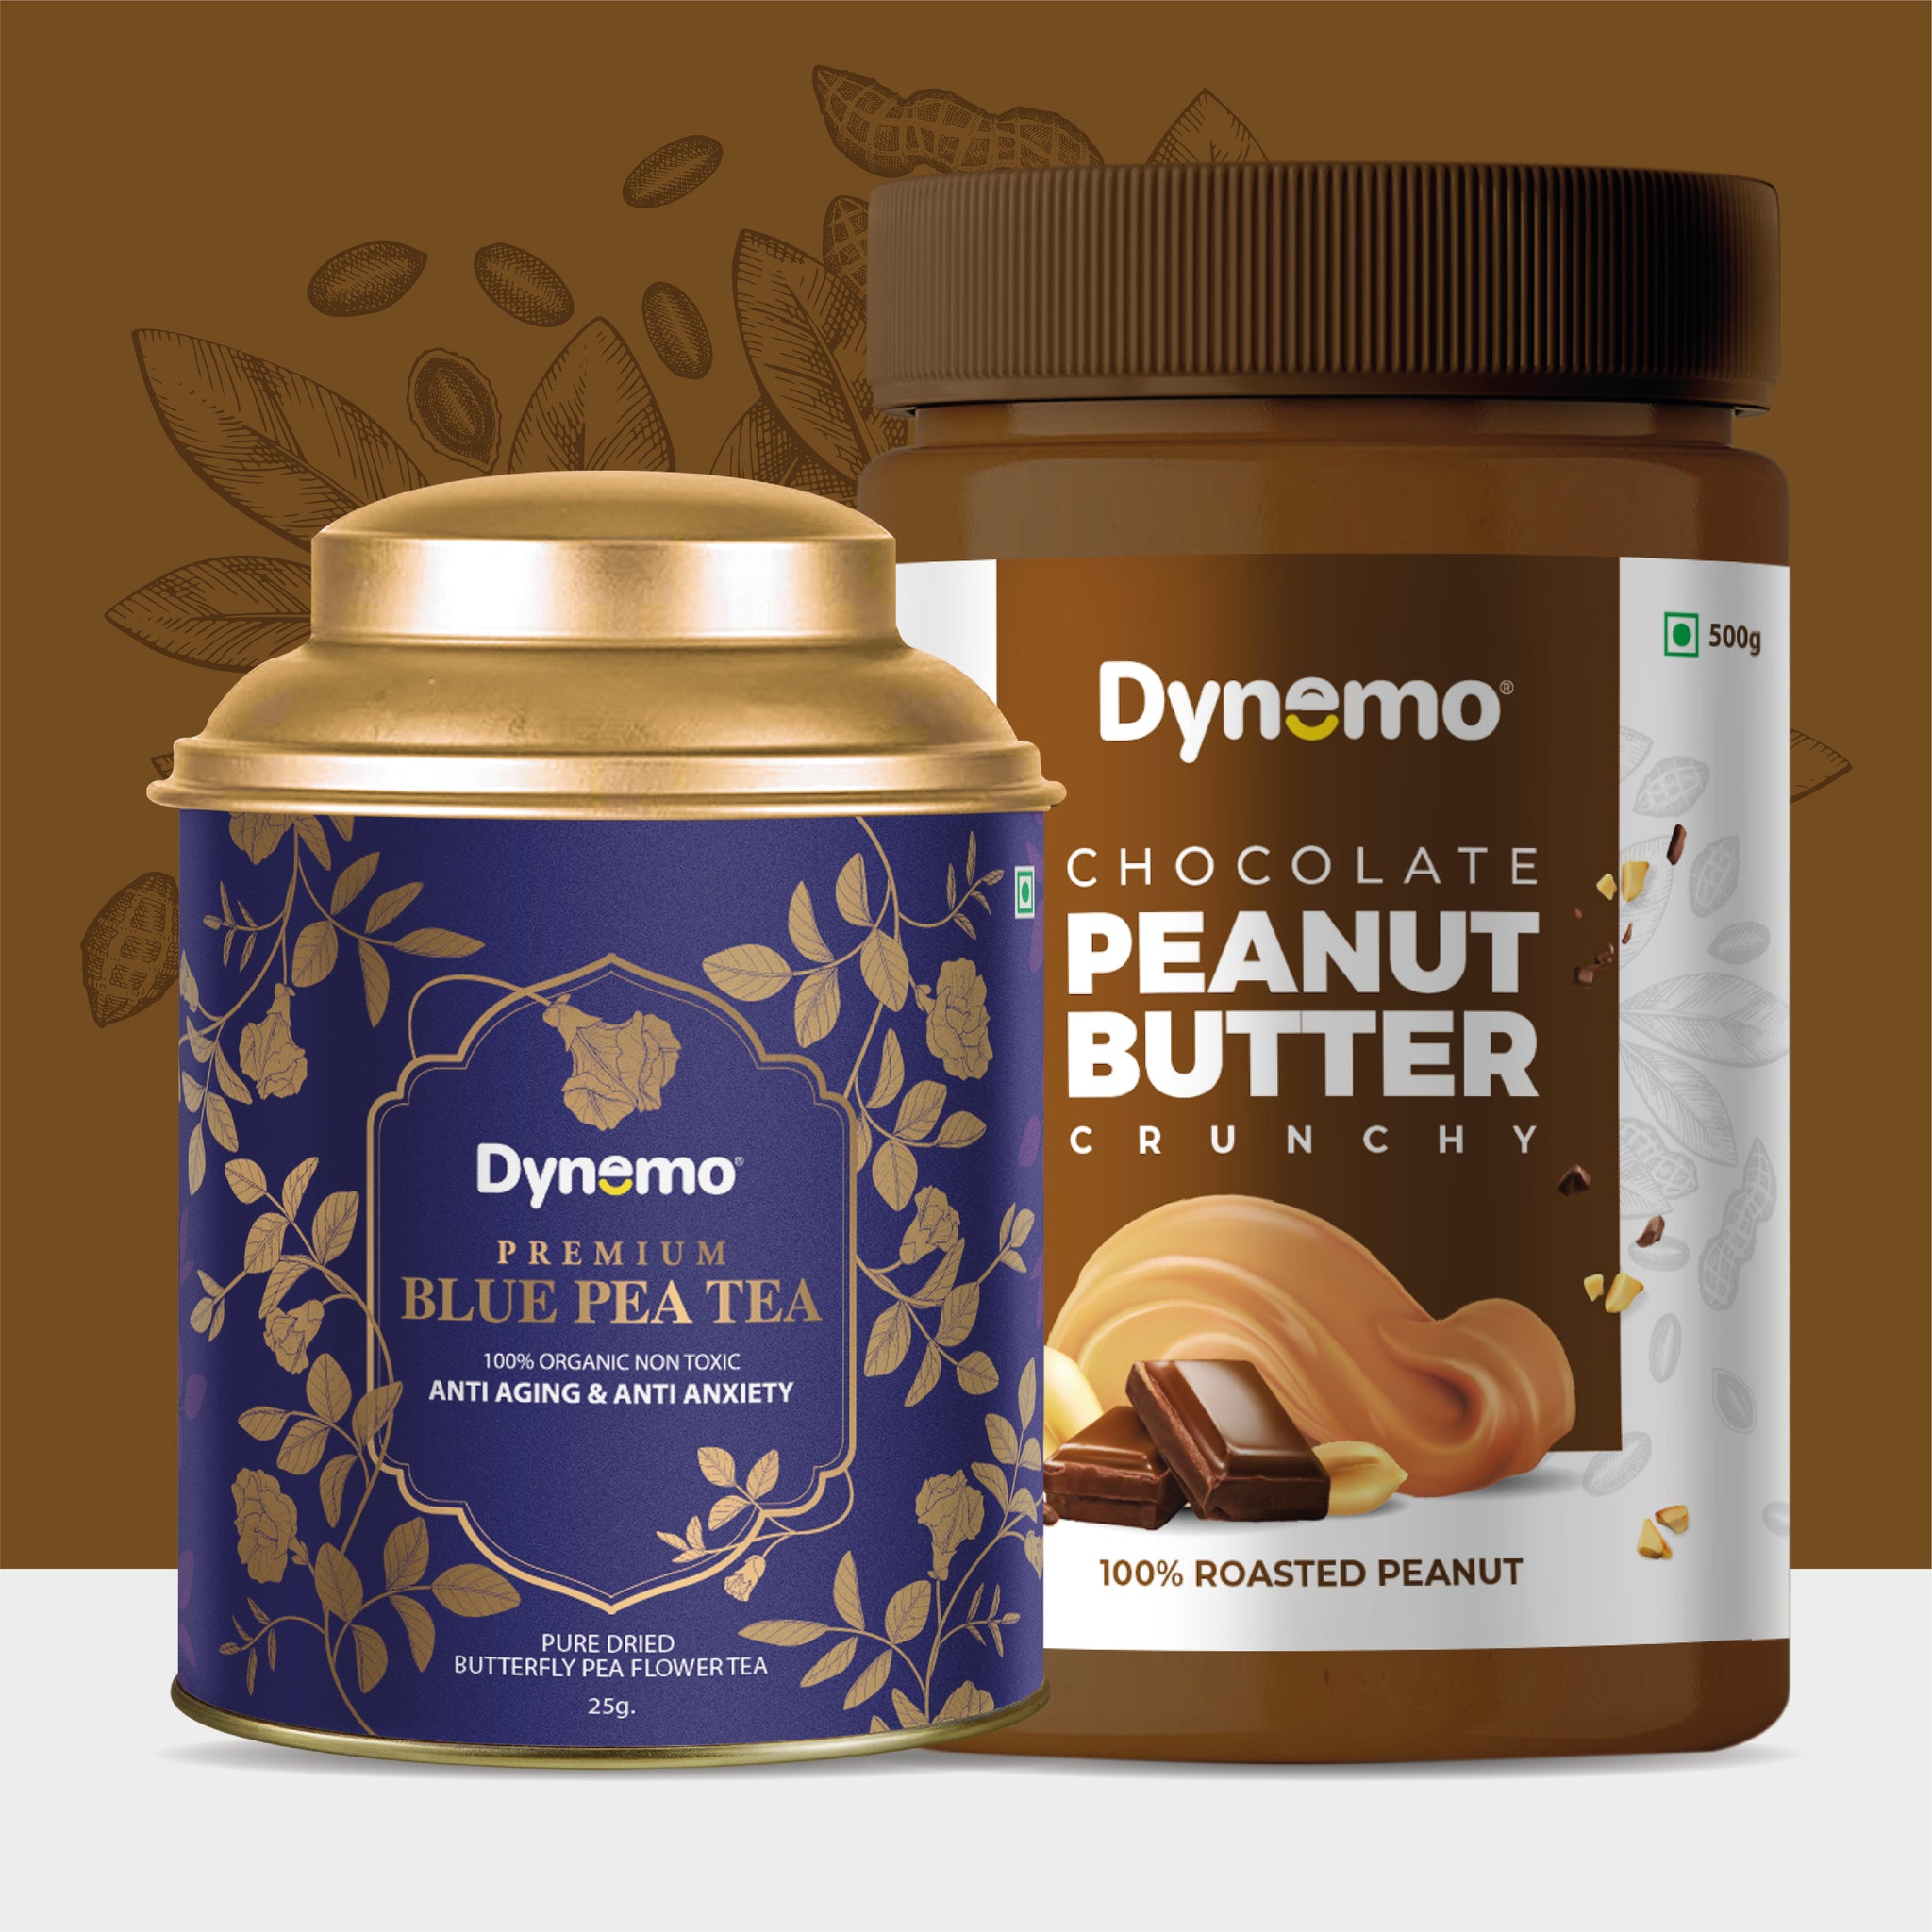 Dynemo Chocolate CRUNCHY Peanut Butter 500g + Dynemo Blue Pea tea 25g.